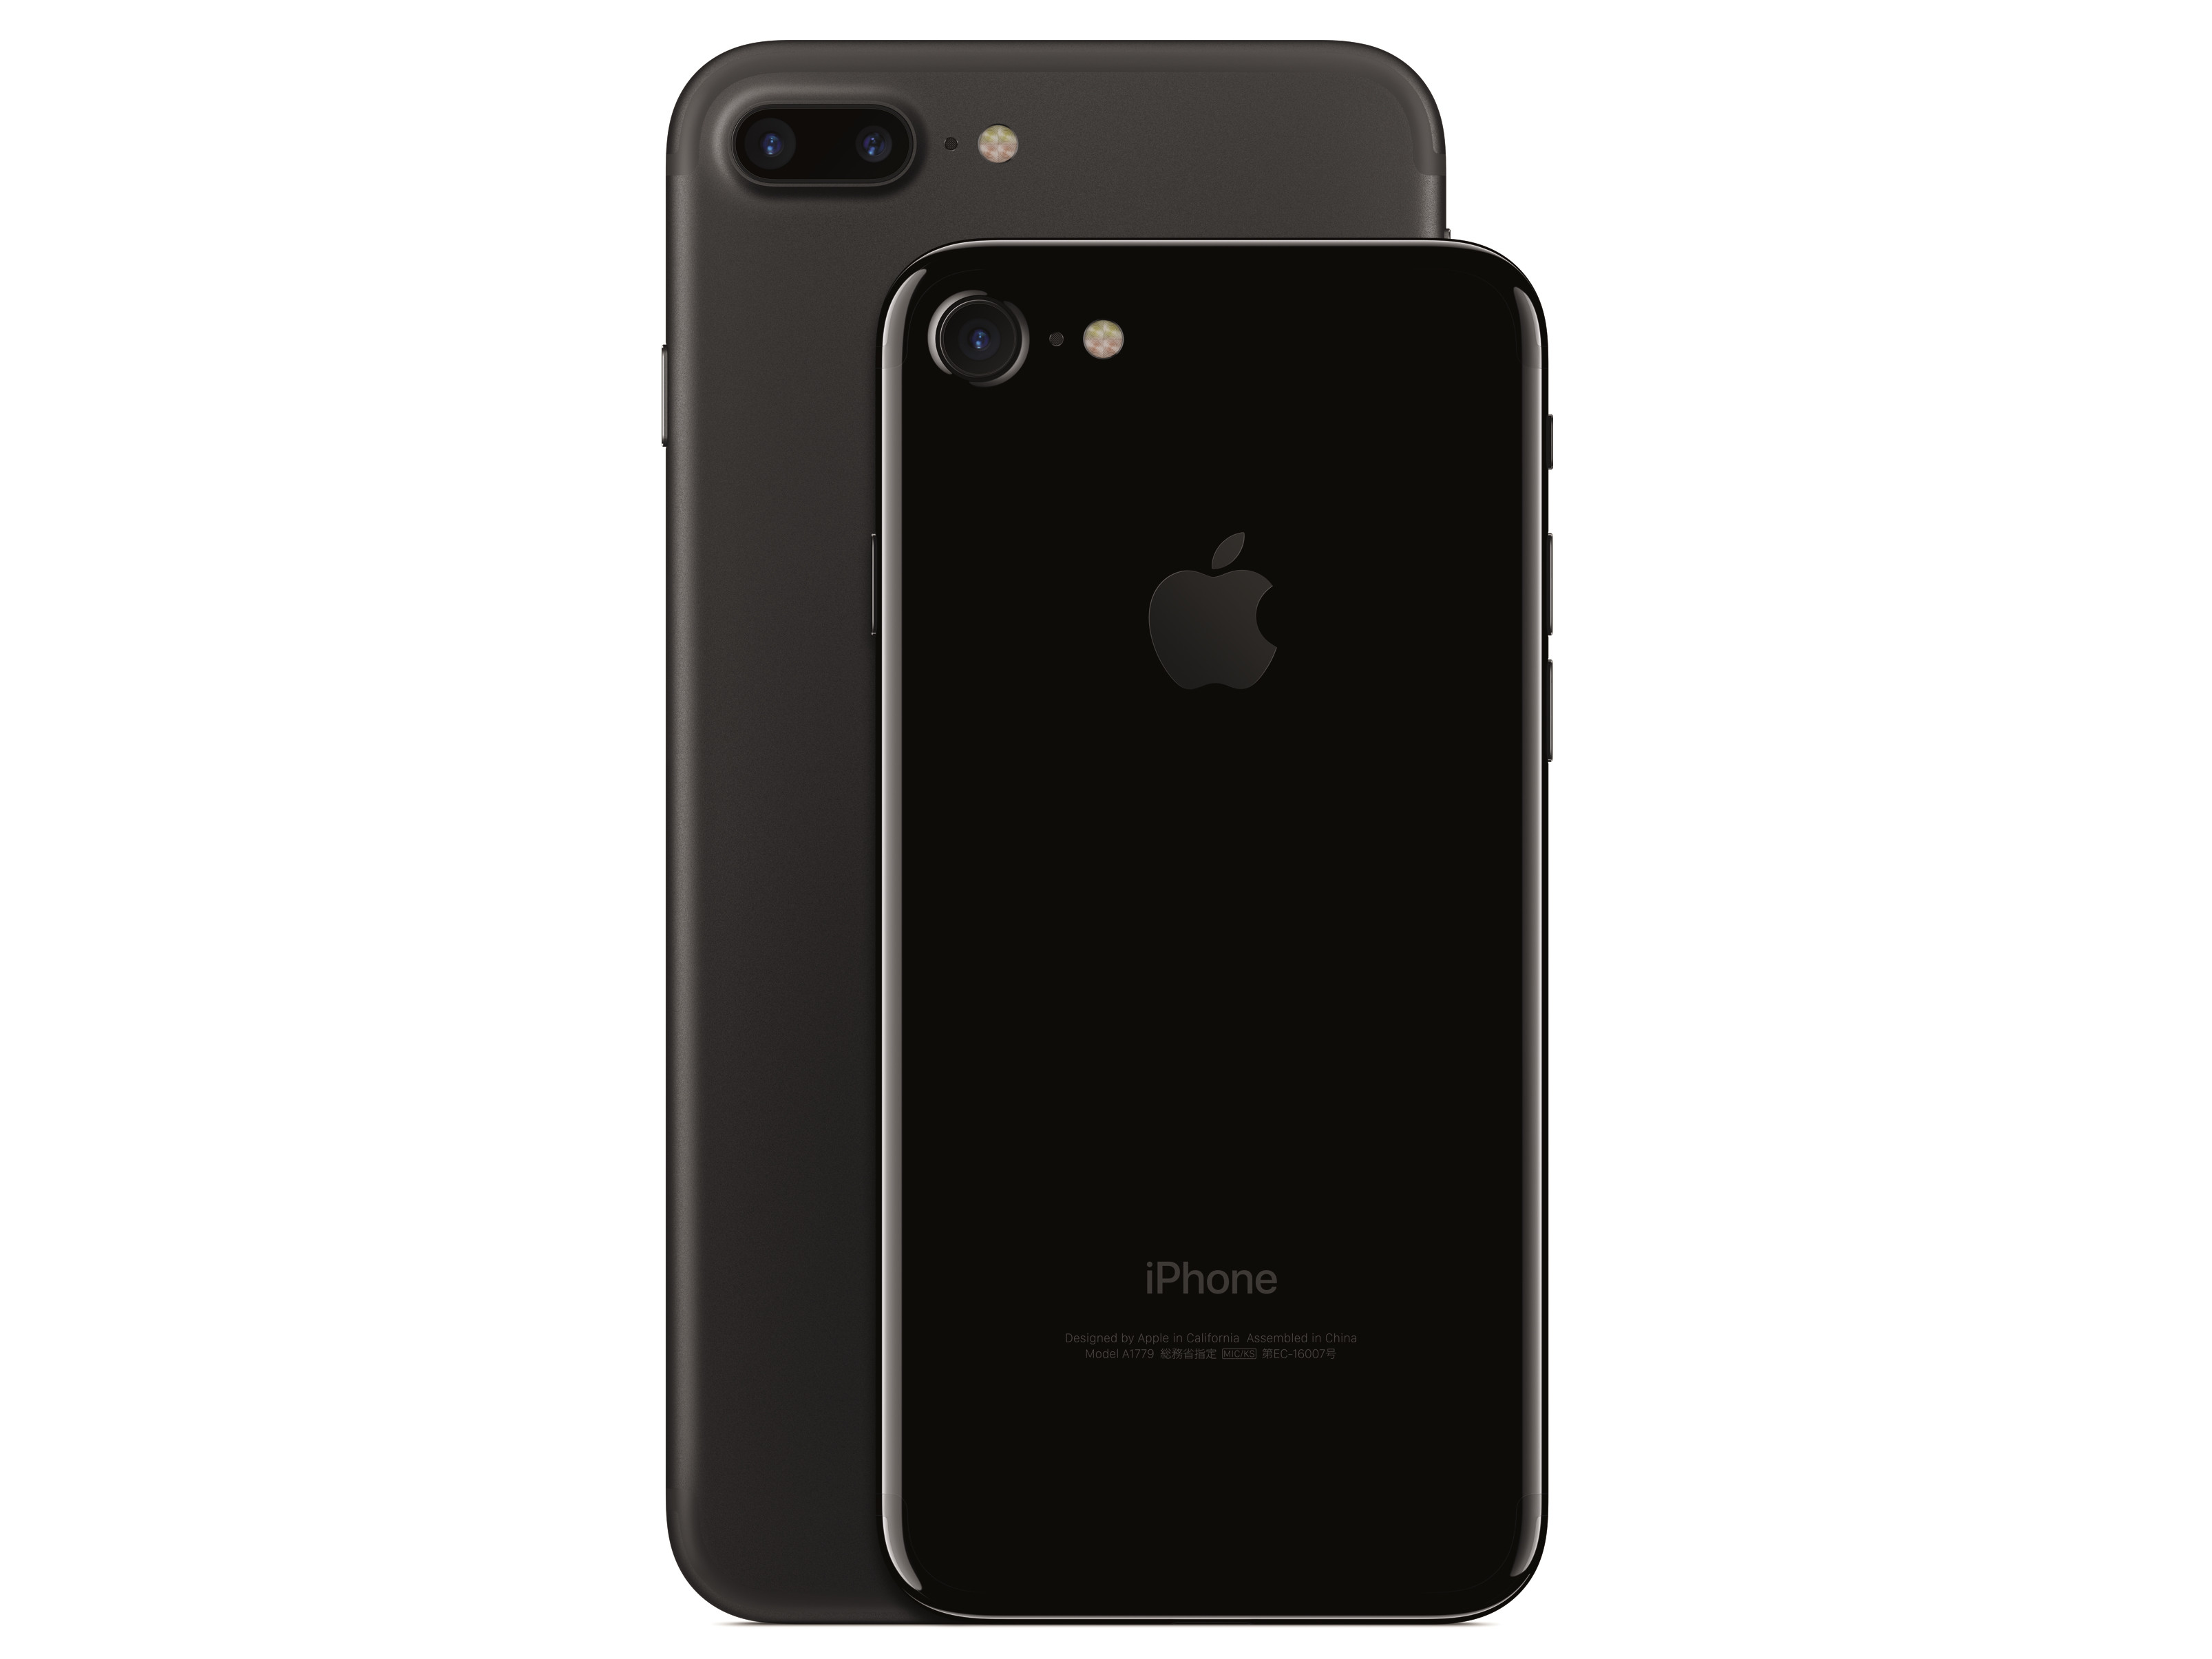 iPhone 7 Jet Black on iPhone 7 Plus Black